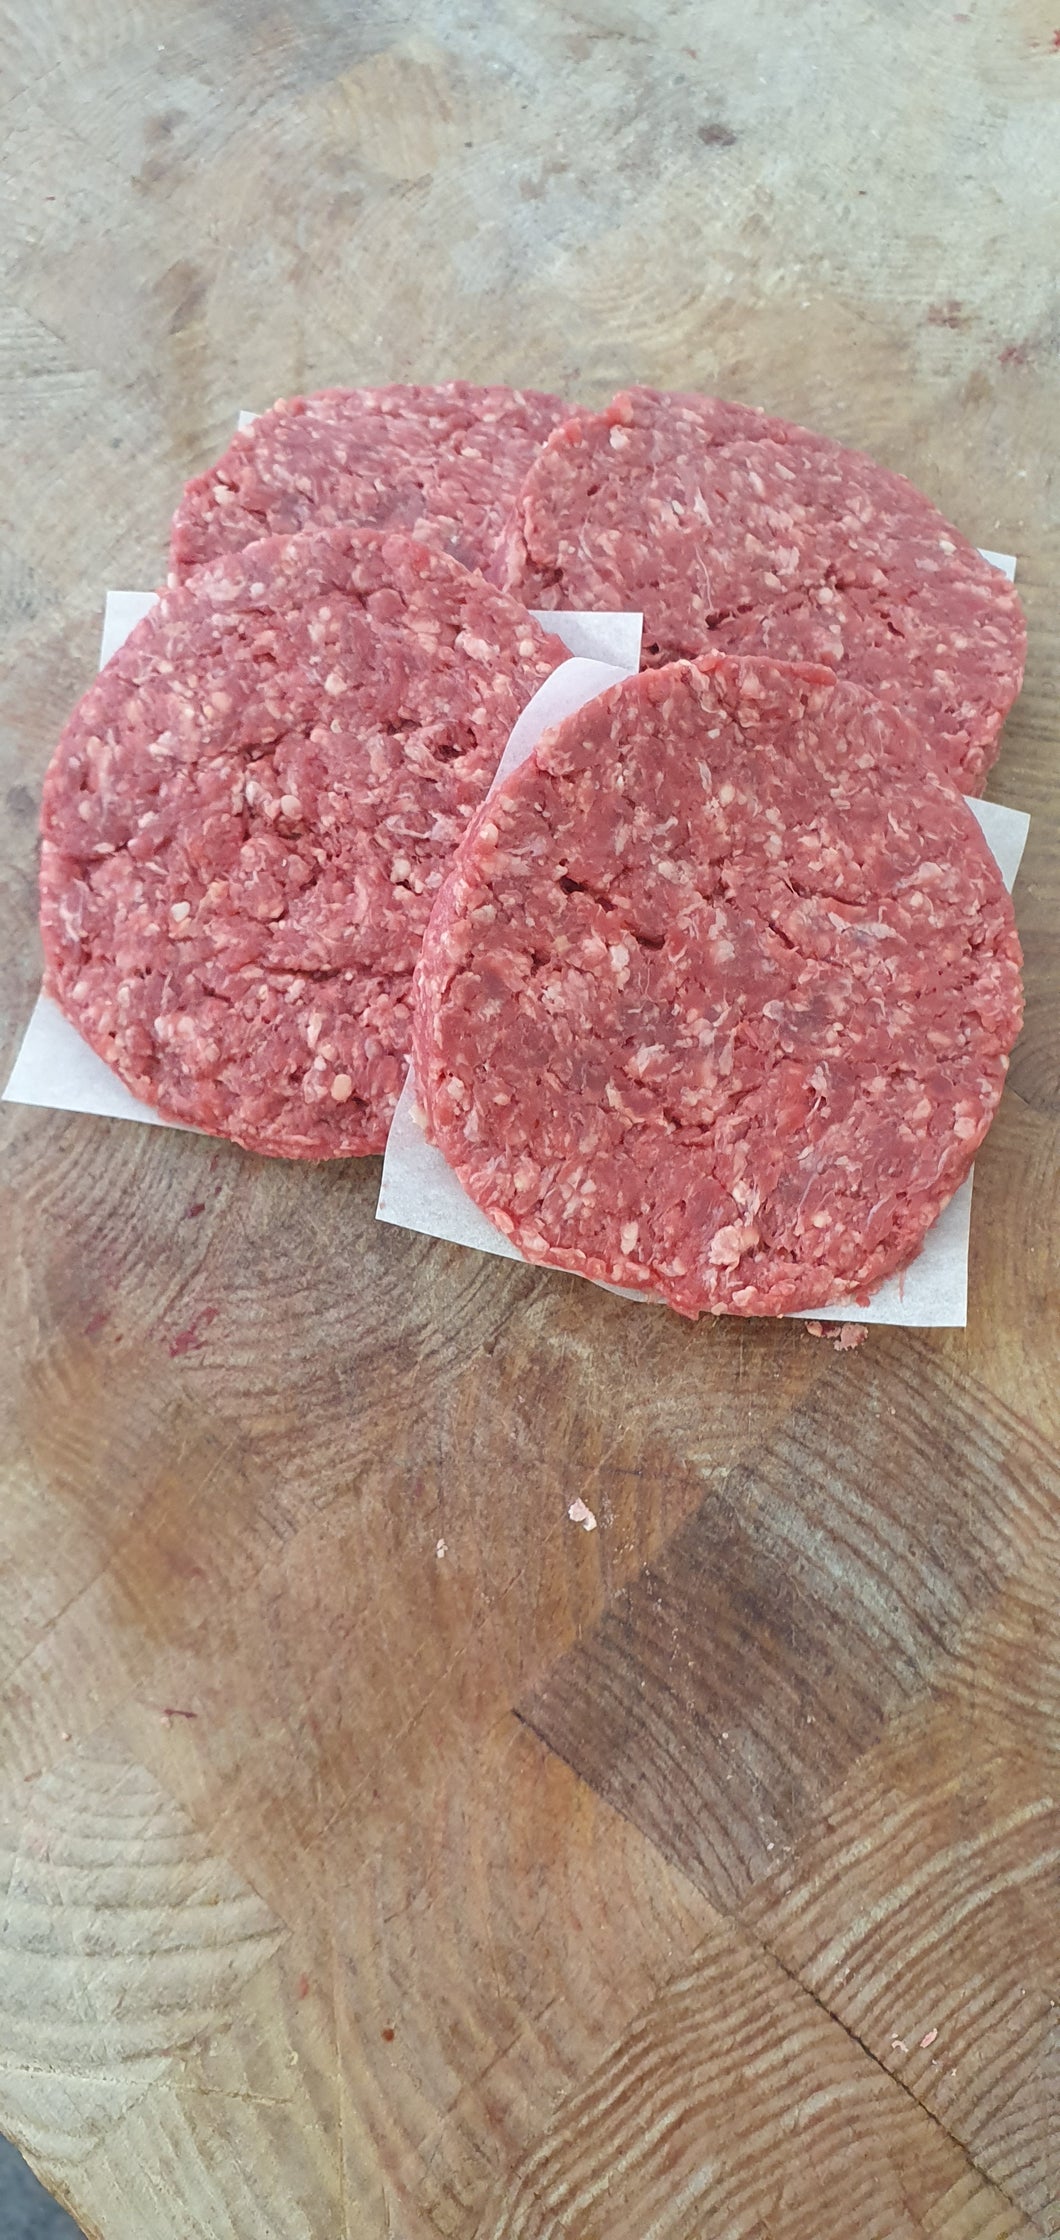 6x Medium Dexter Steak Burgers 4oz -113g